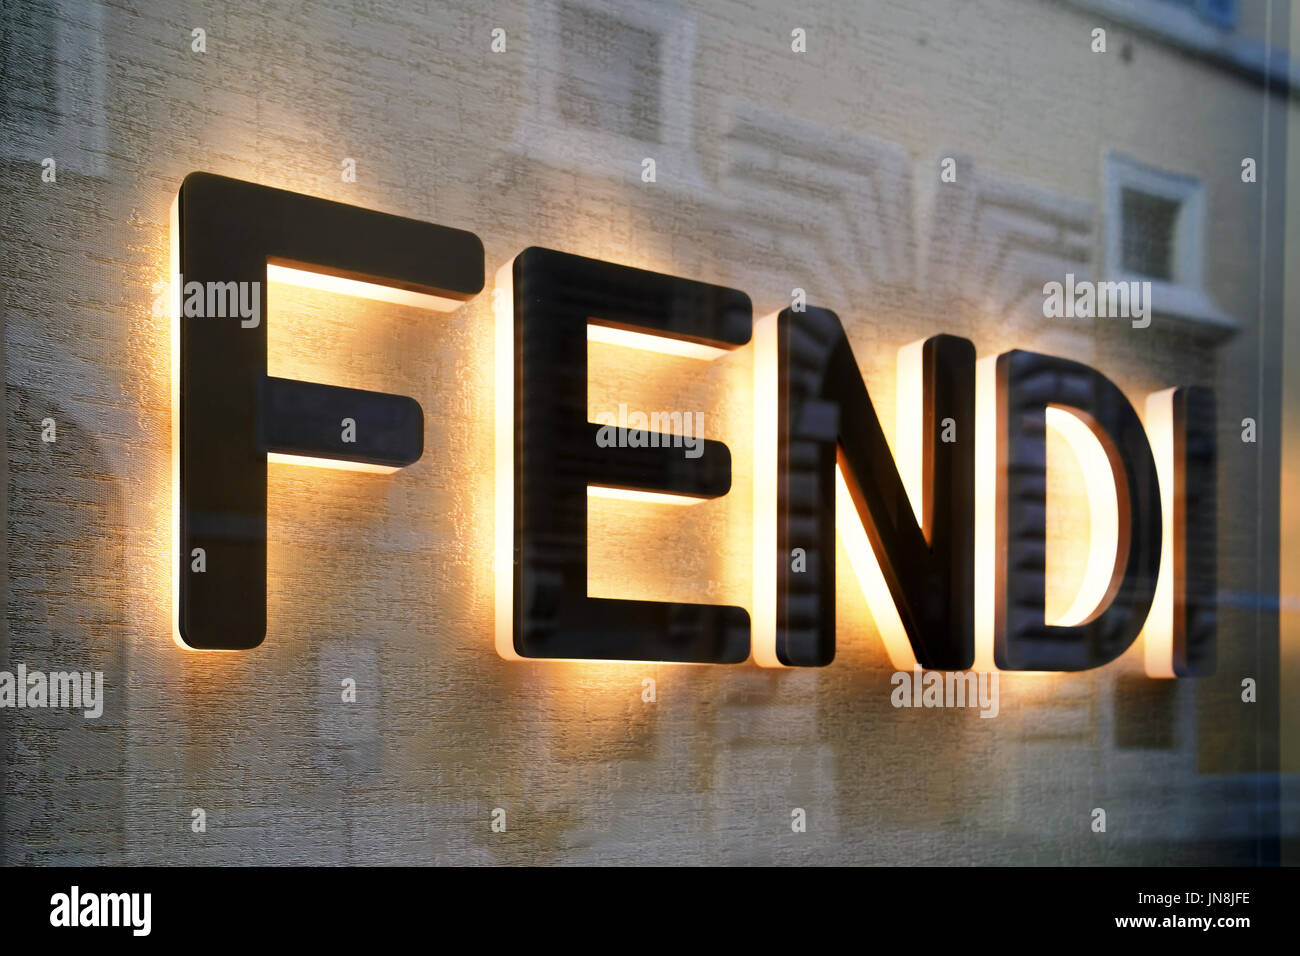 Fendi Store, Rome – License image – 70274576 ❘ lookphotos